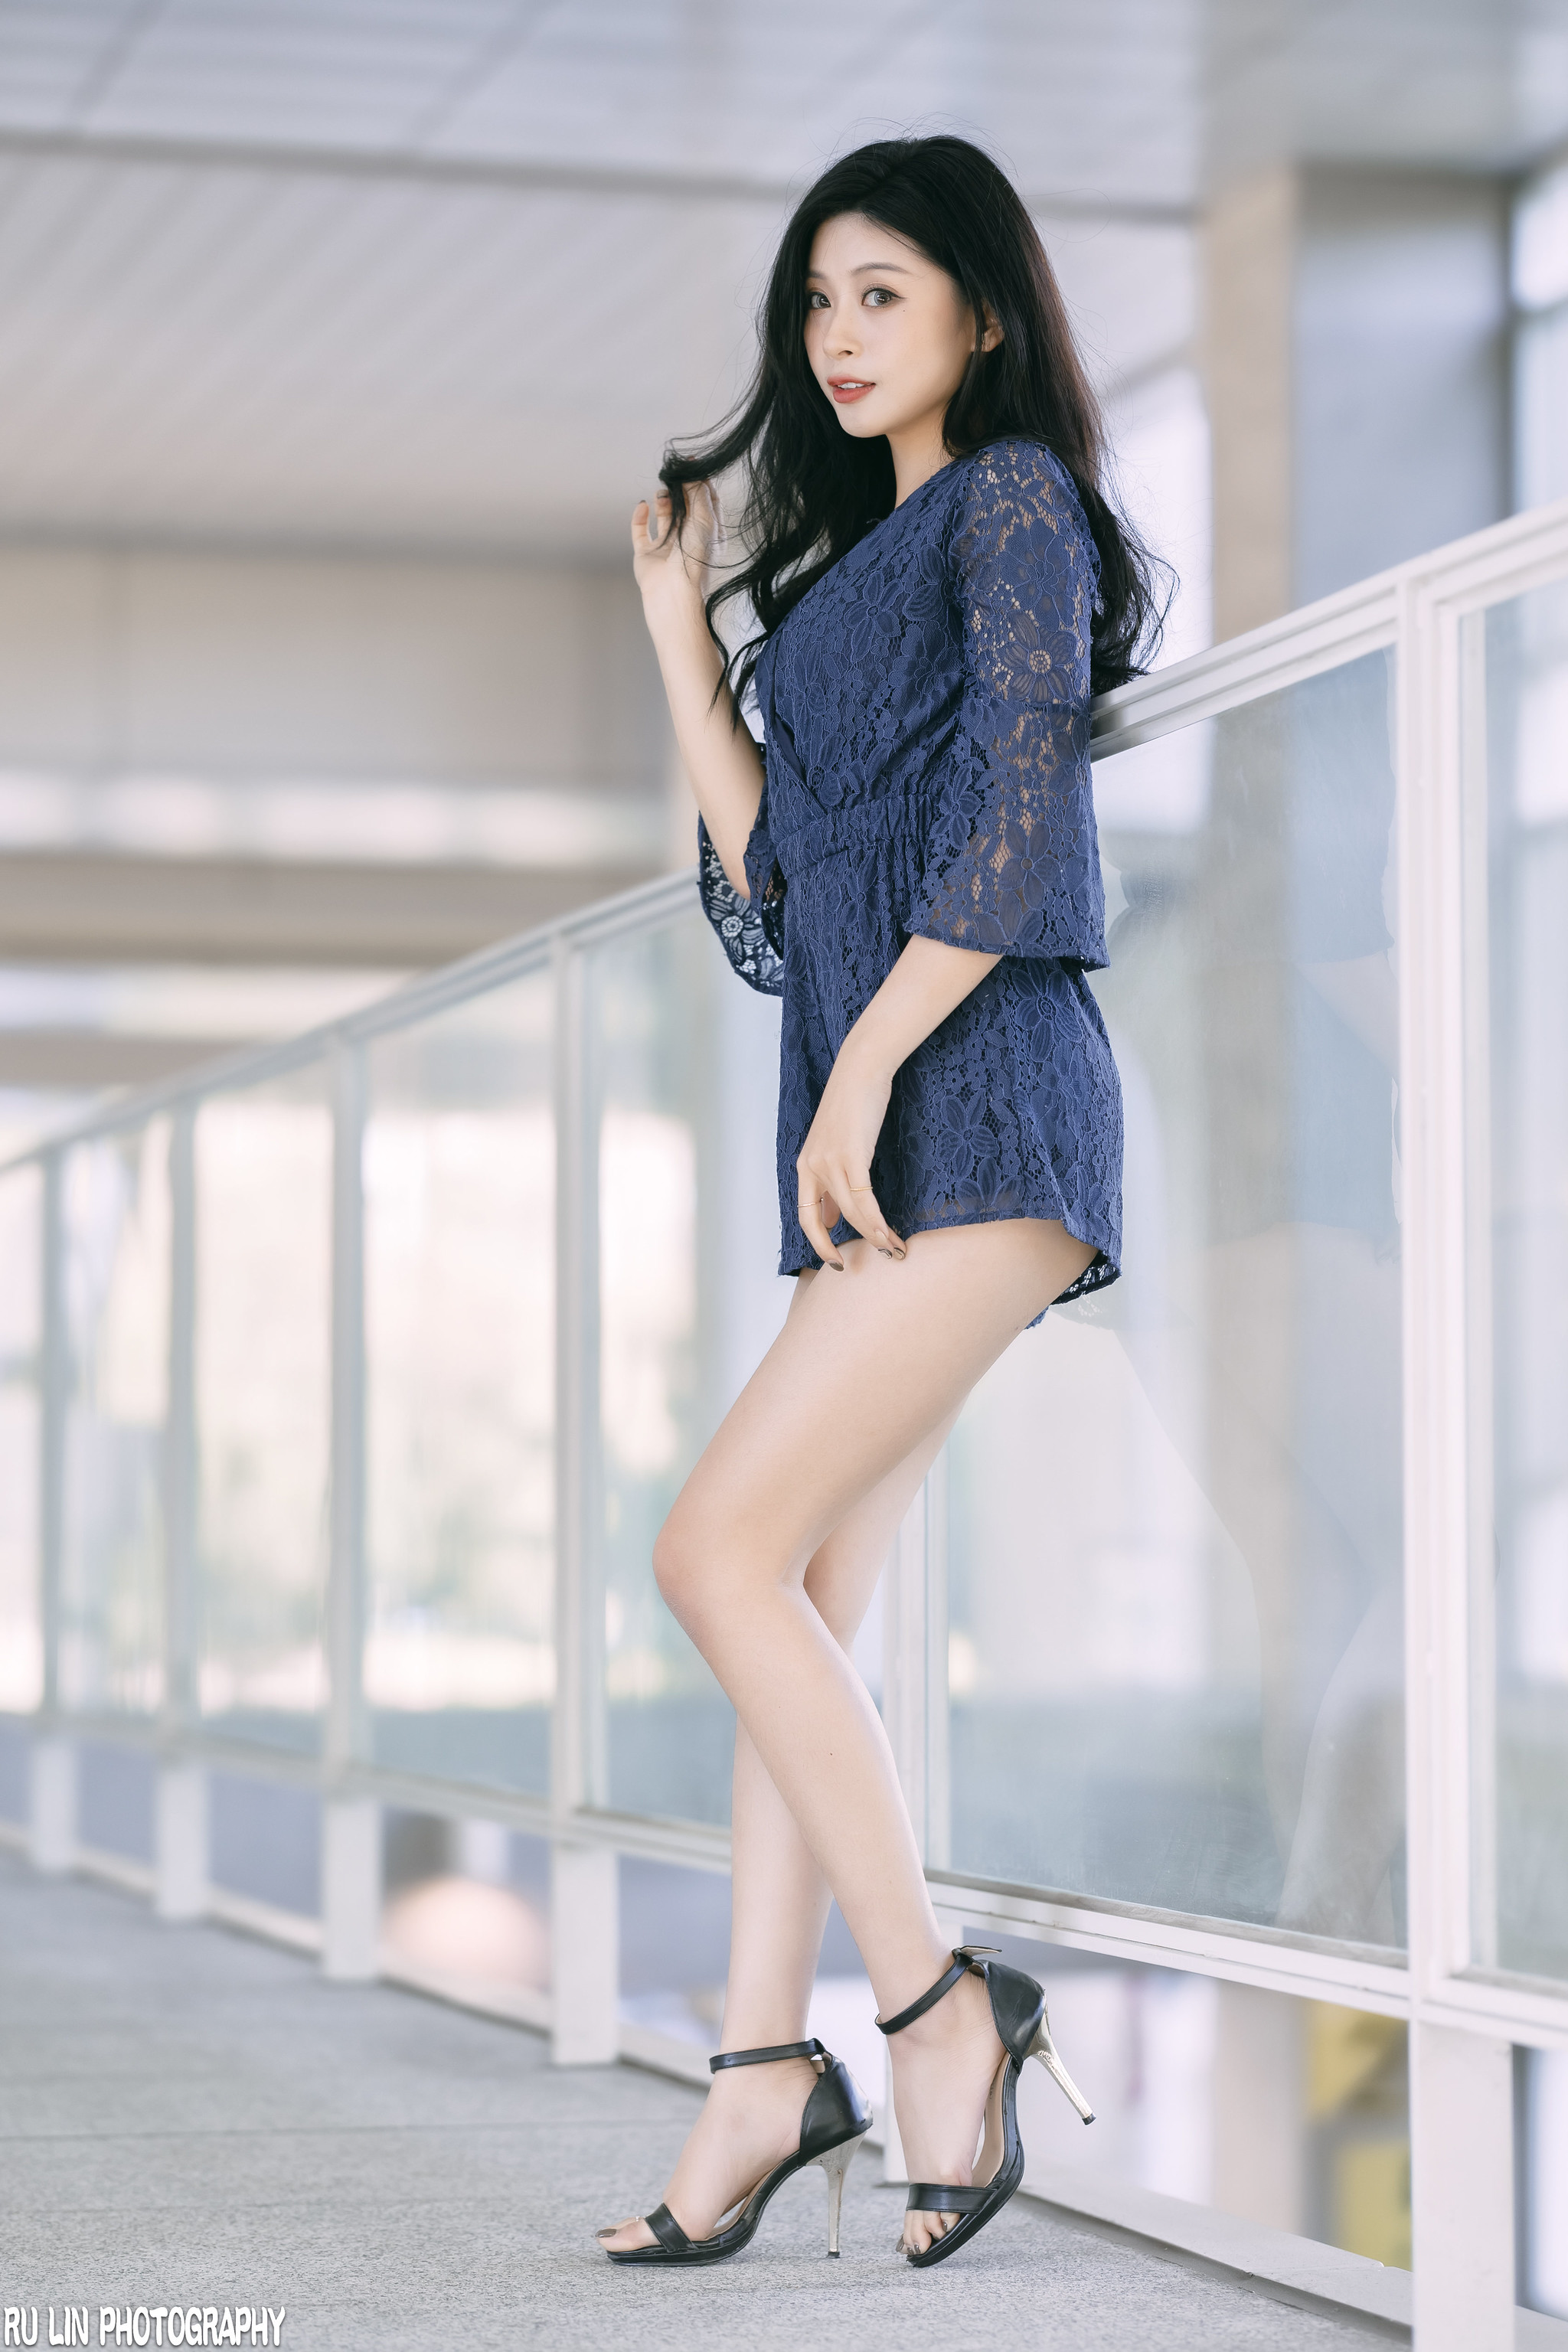 UMAX Boren Women PinQ Dark Hair Asian Blue Dress Fence Holding Hair High Heels 2048x3072